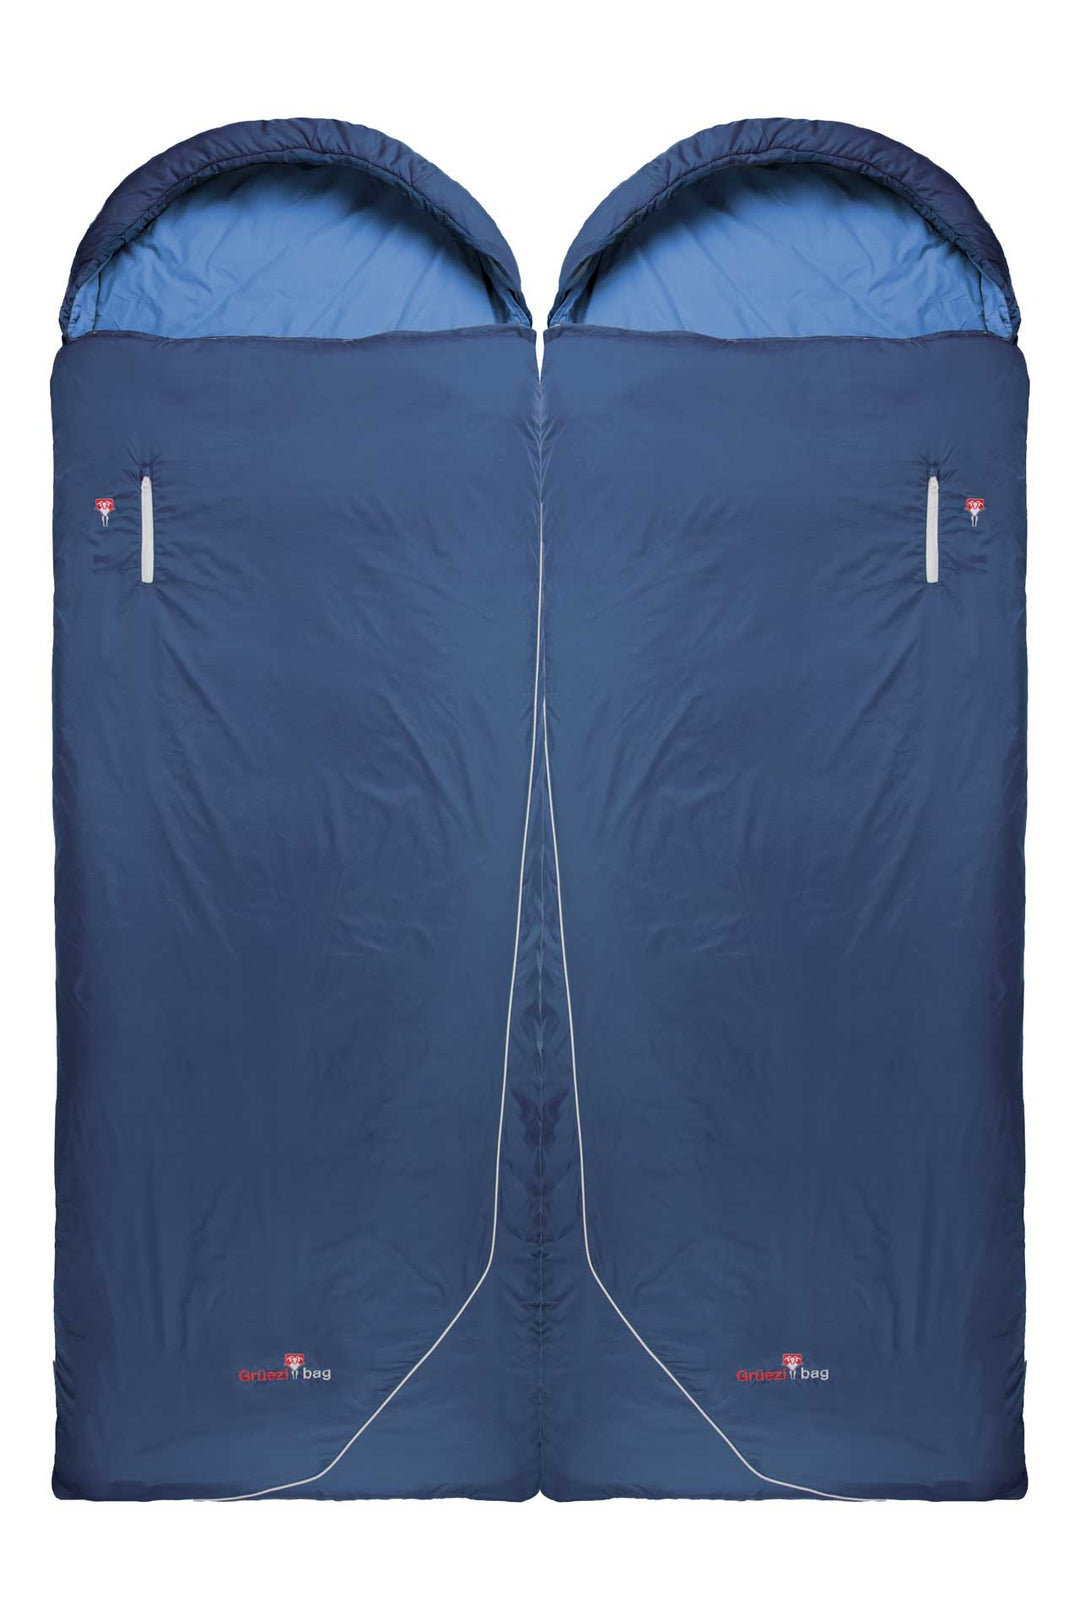 Biopod Wool Goas Cotton Comfort blanket sleeping bag